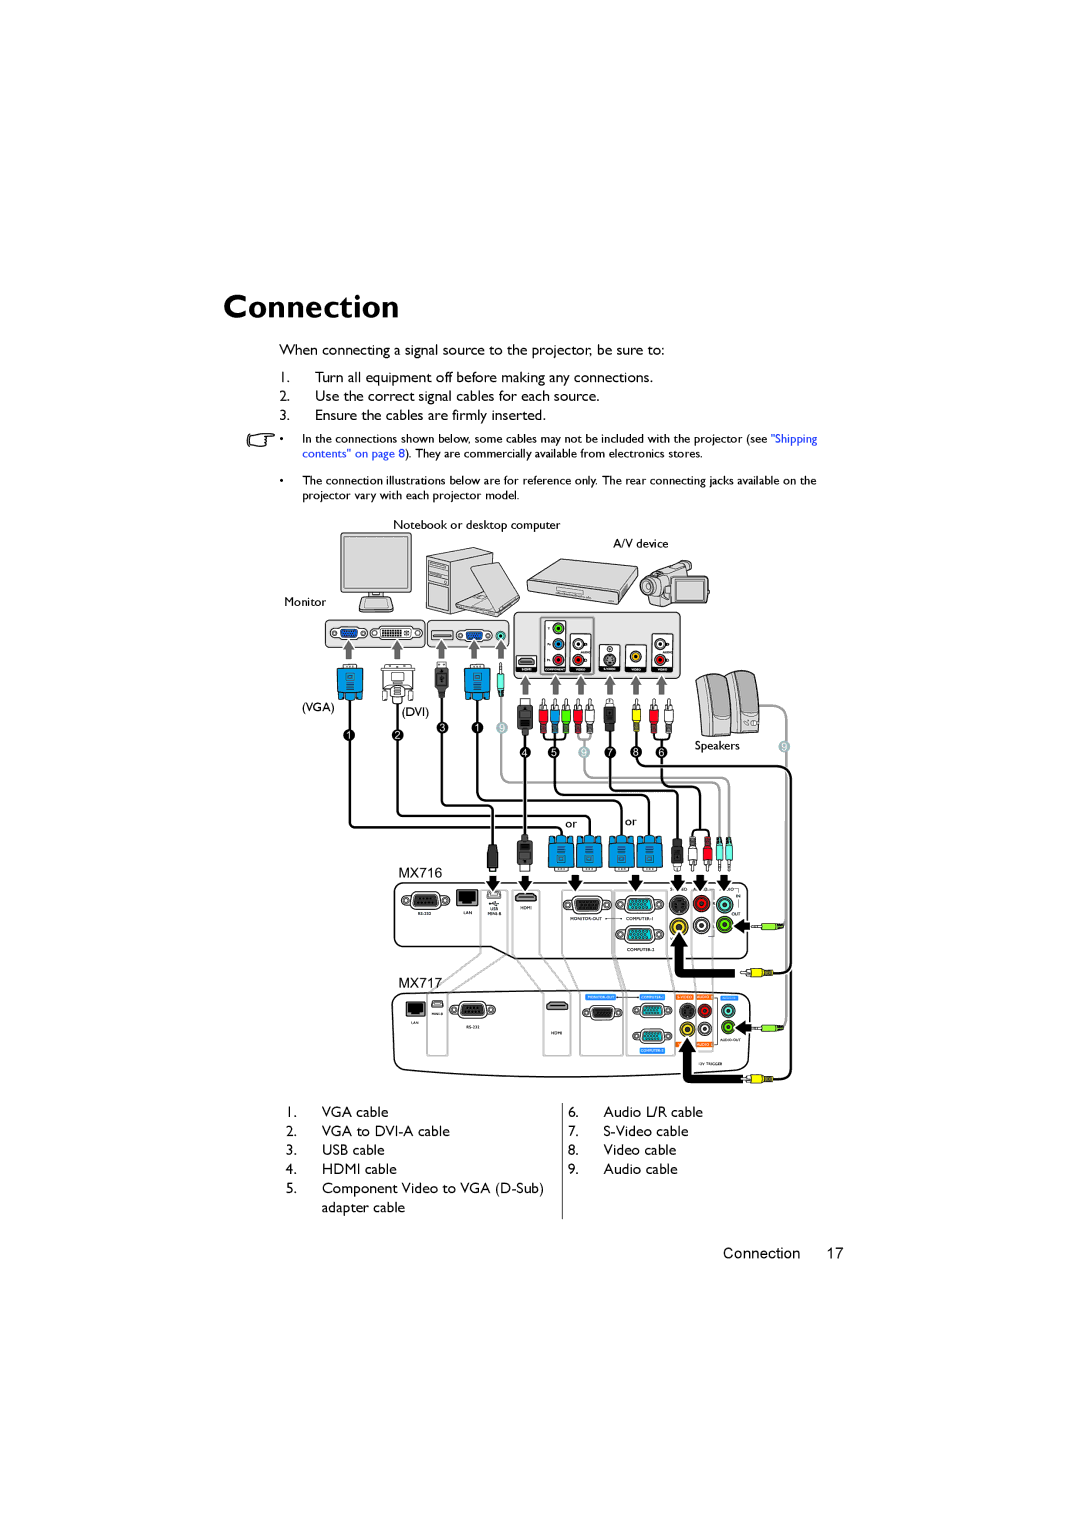 BenQ MX717, MX716 user manual Connection 